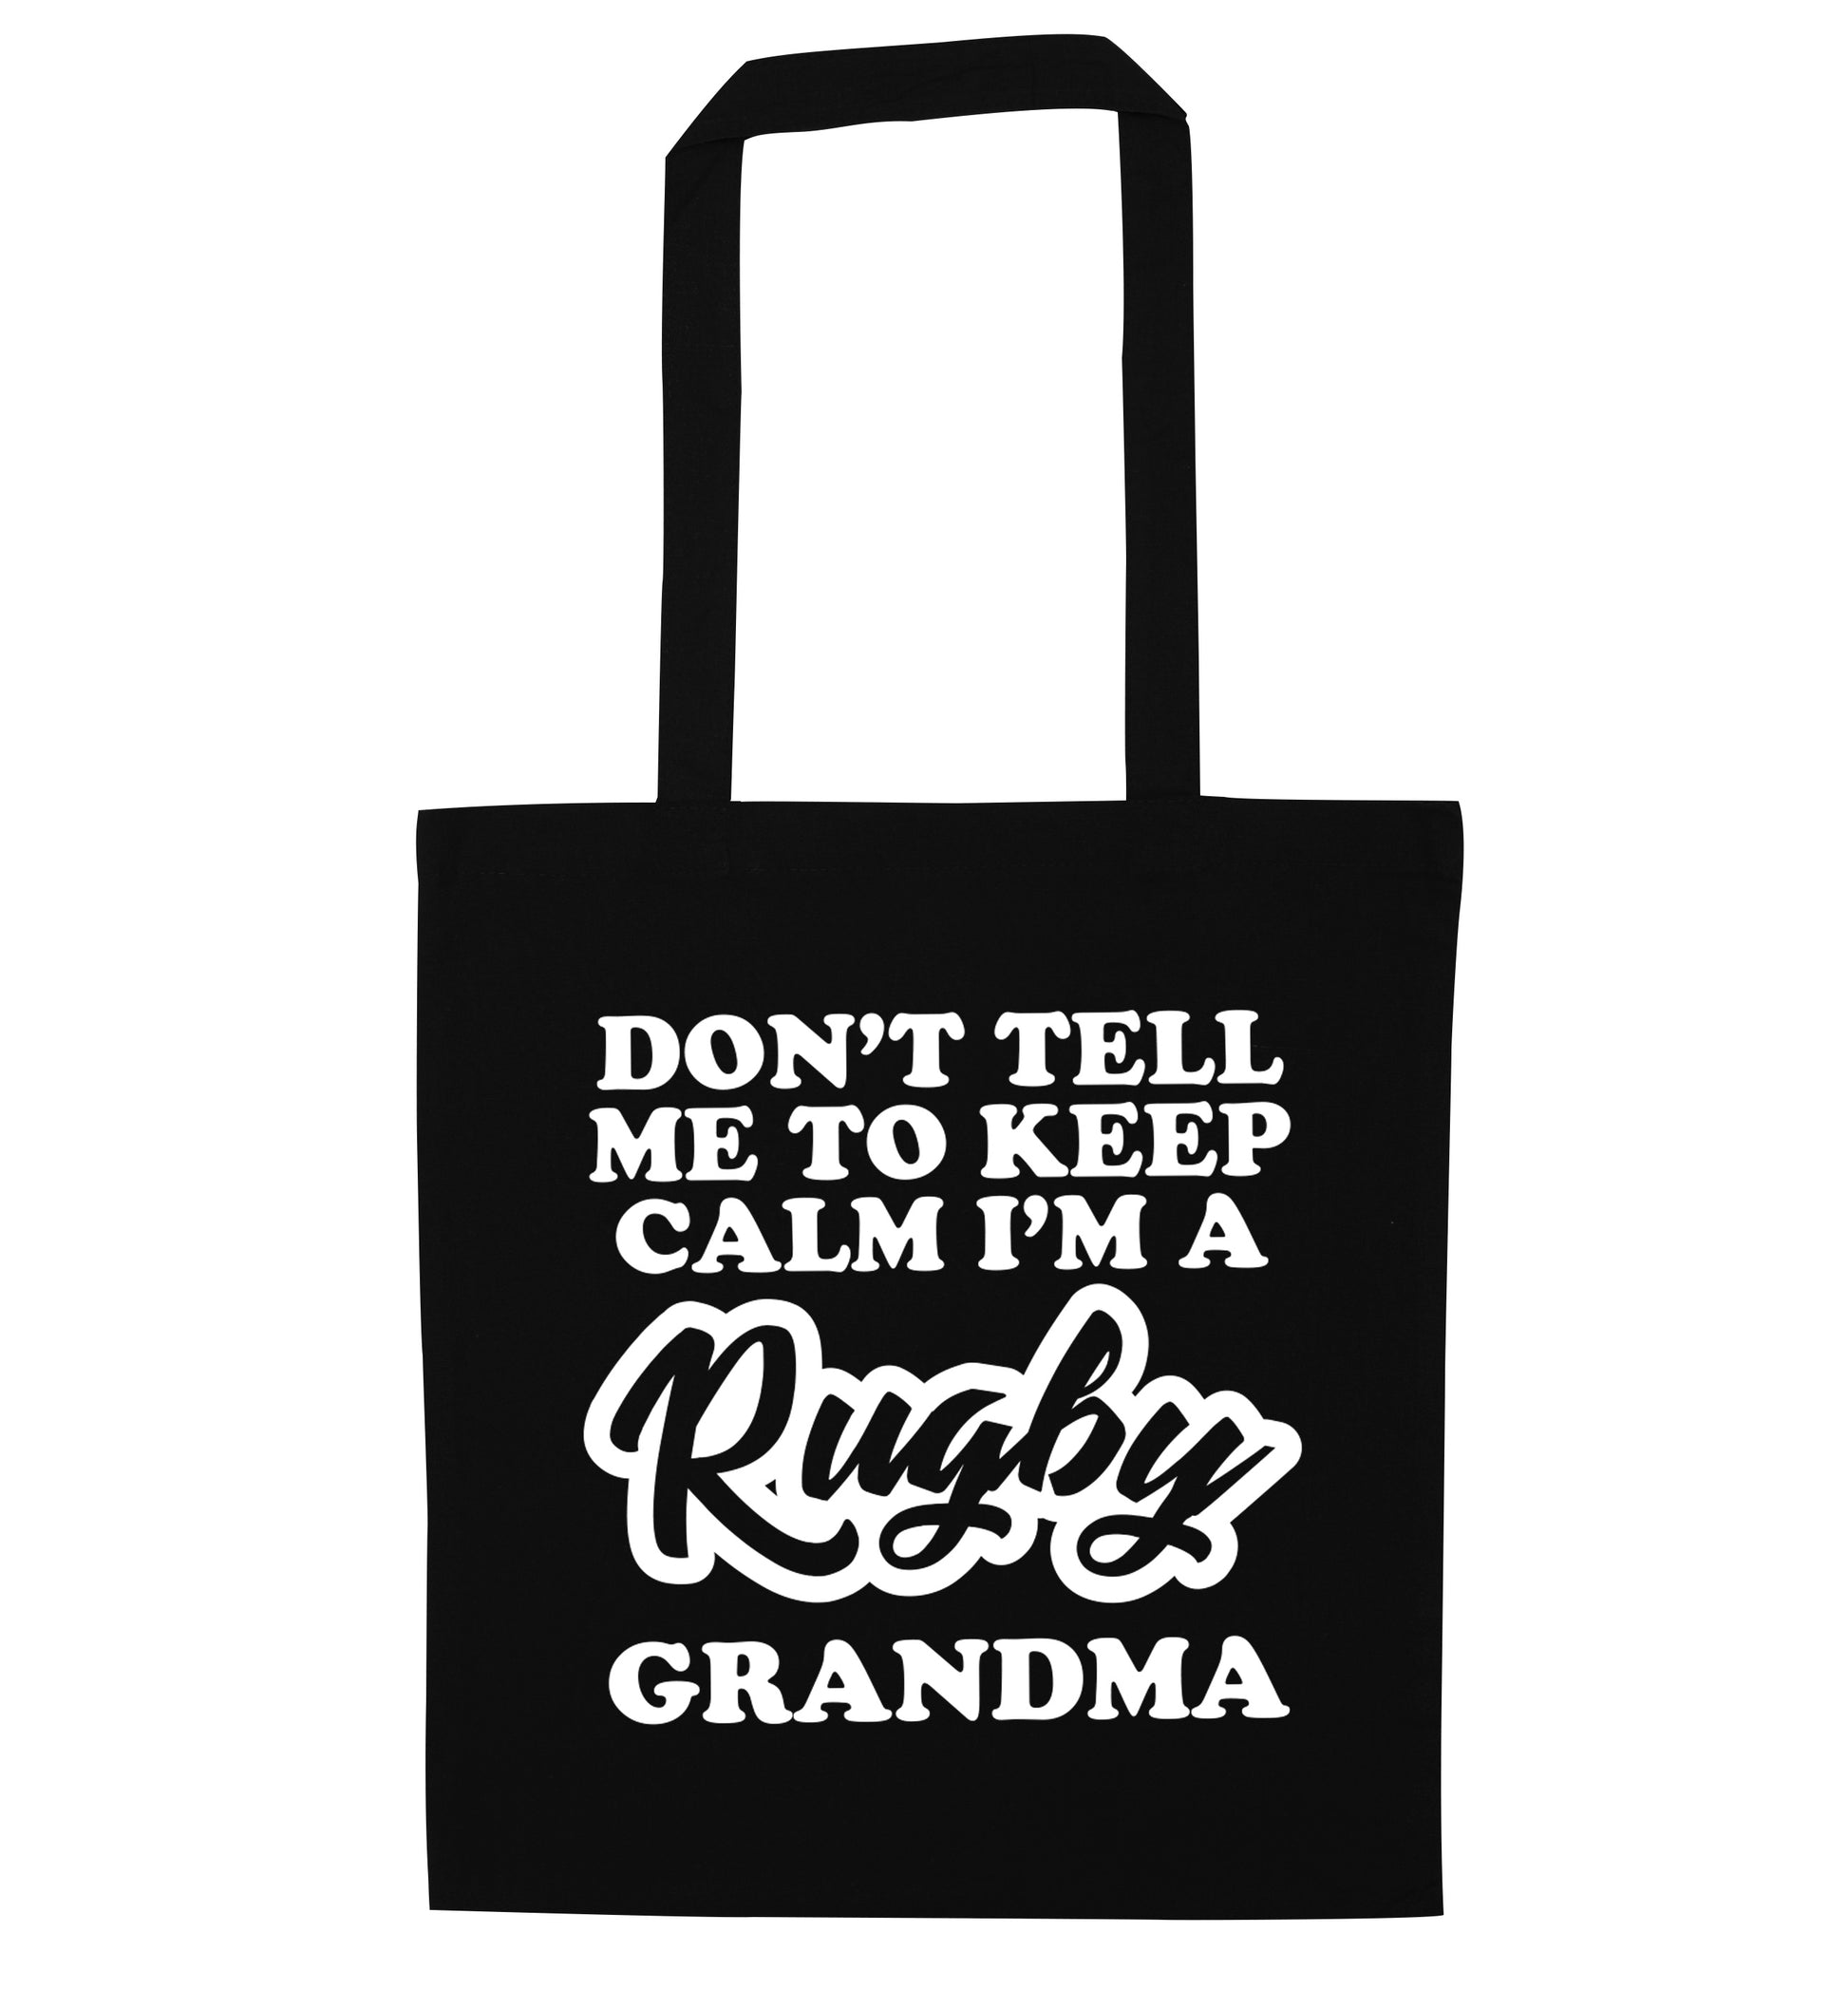 Don't tell me to keep calm I'm a rugby grandma black tote bag